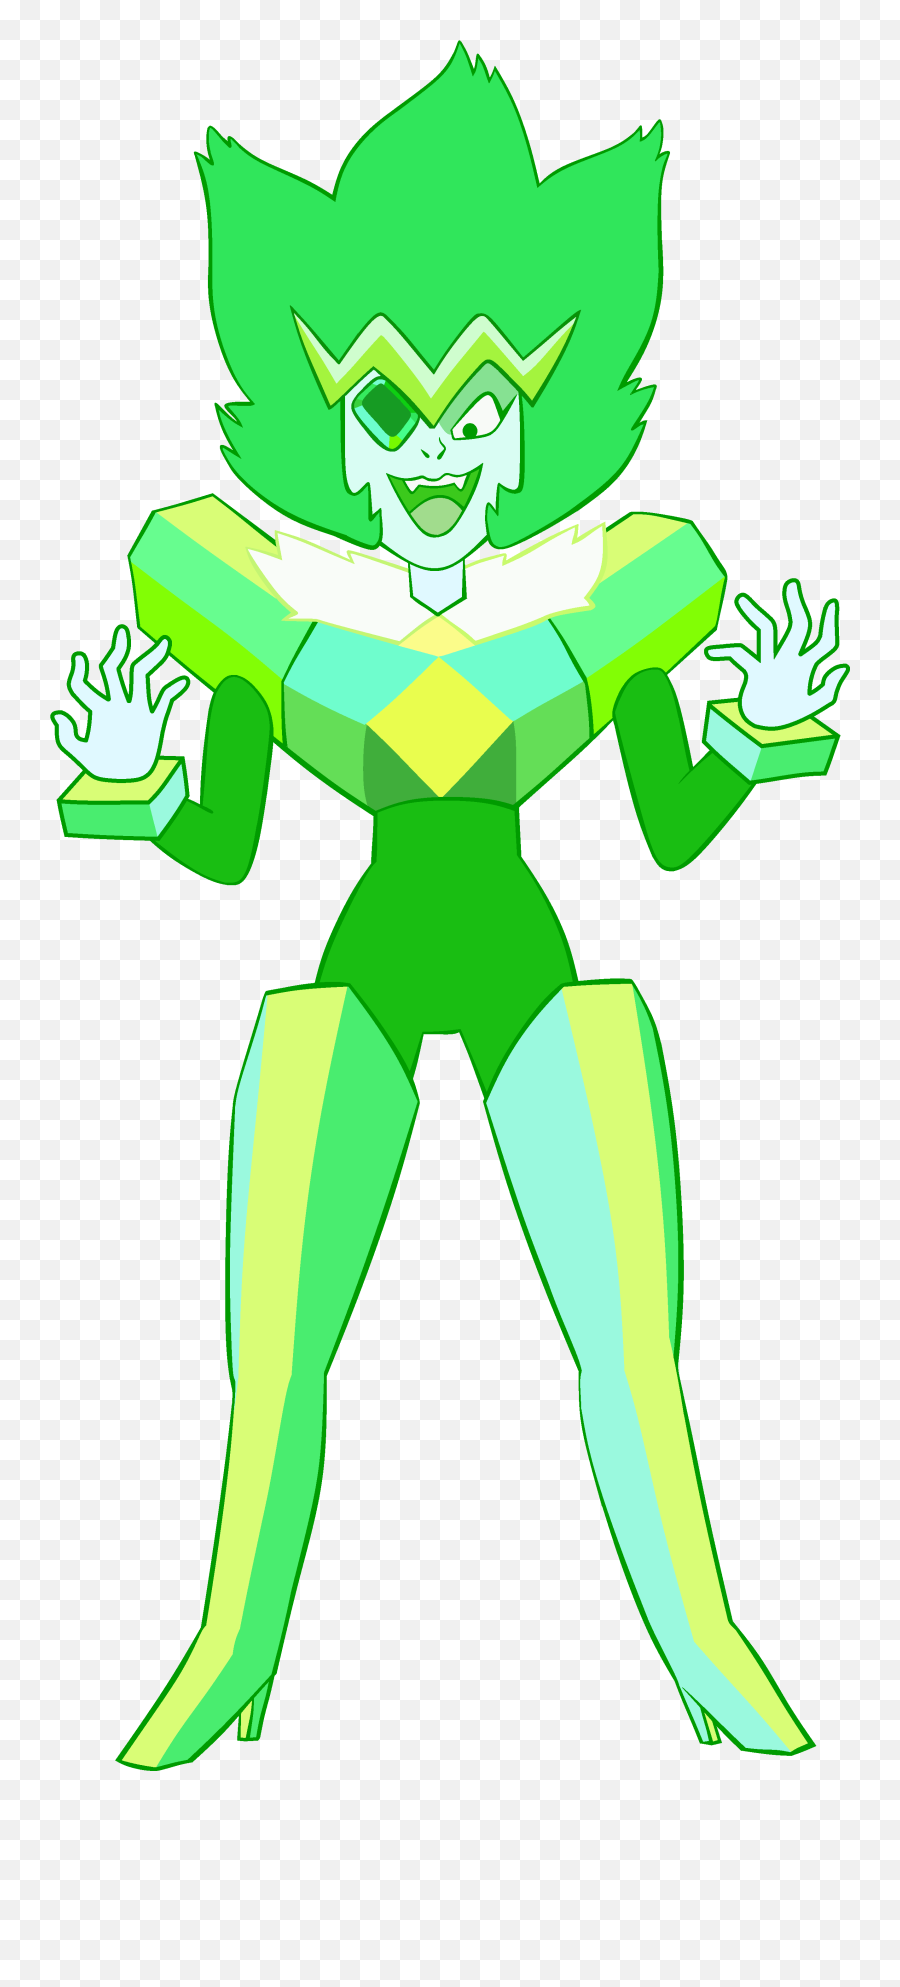 Emerald - Emerald Steven Universe Gems Emoji,Why Is Emoticon A Green Blob Alien